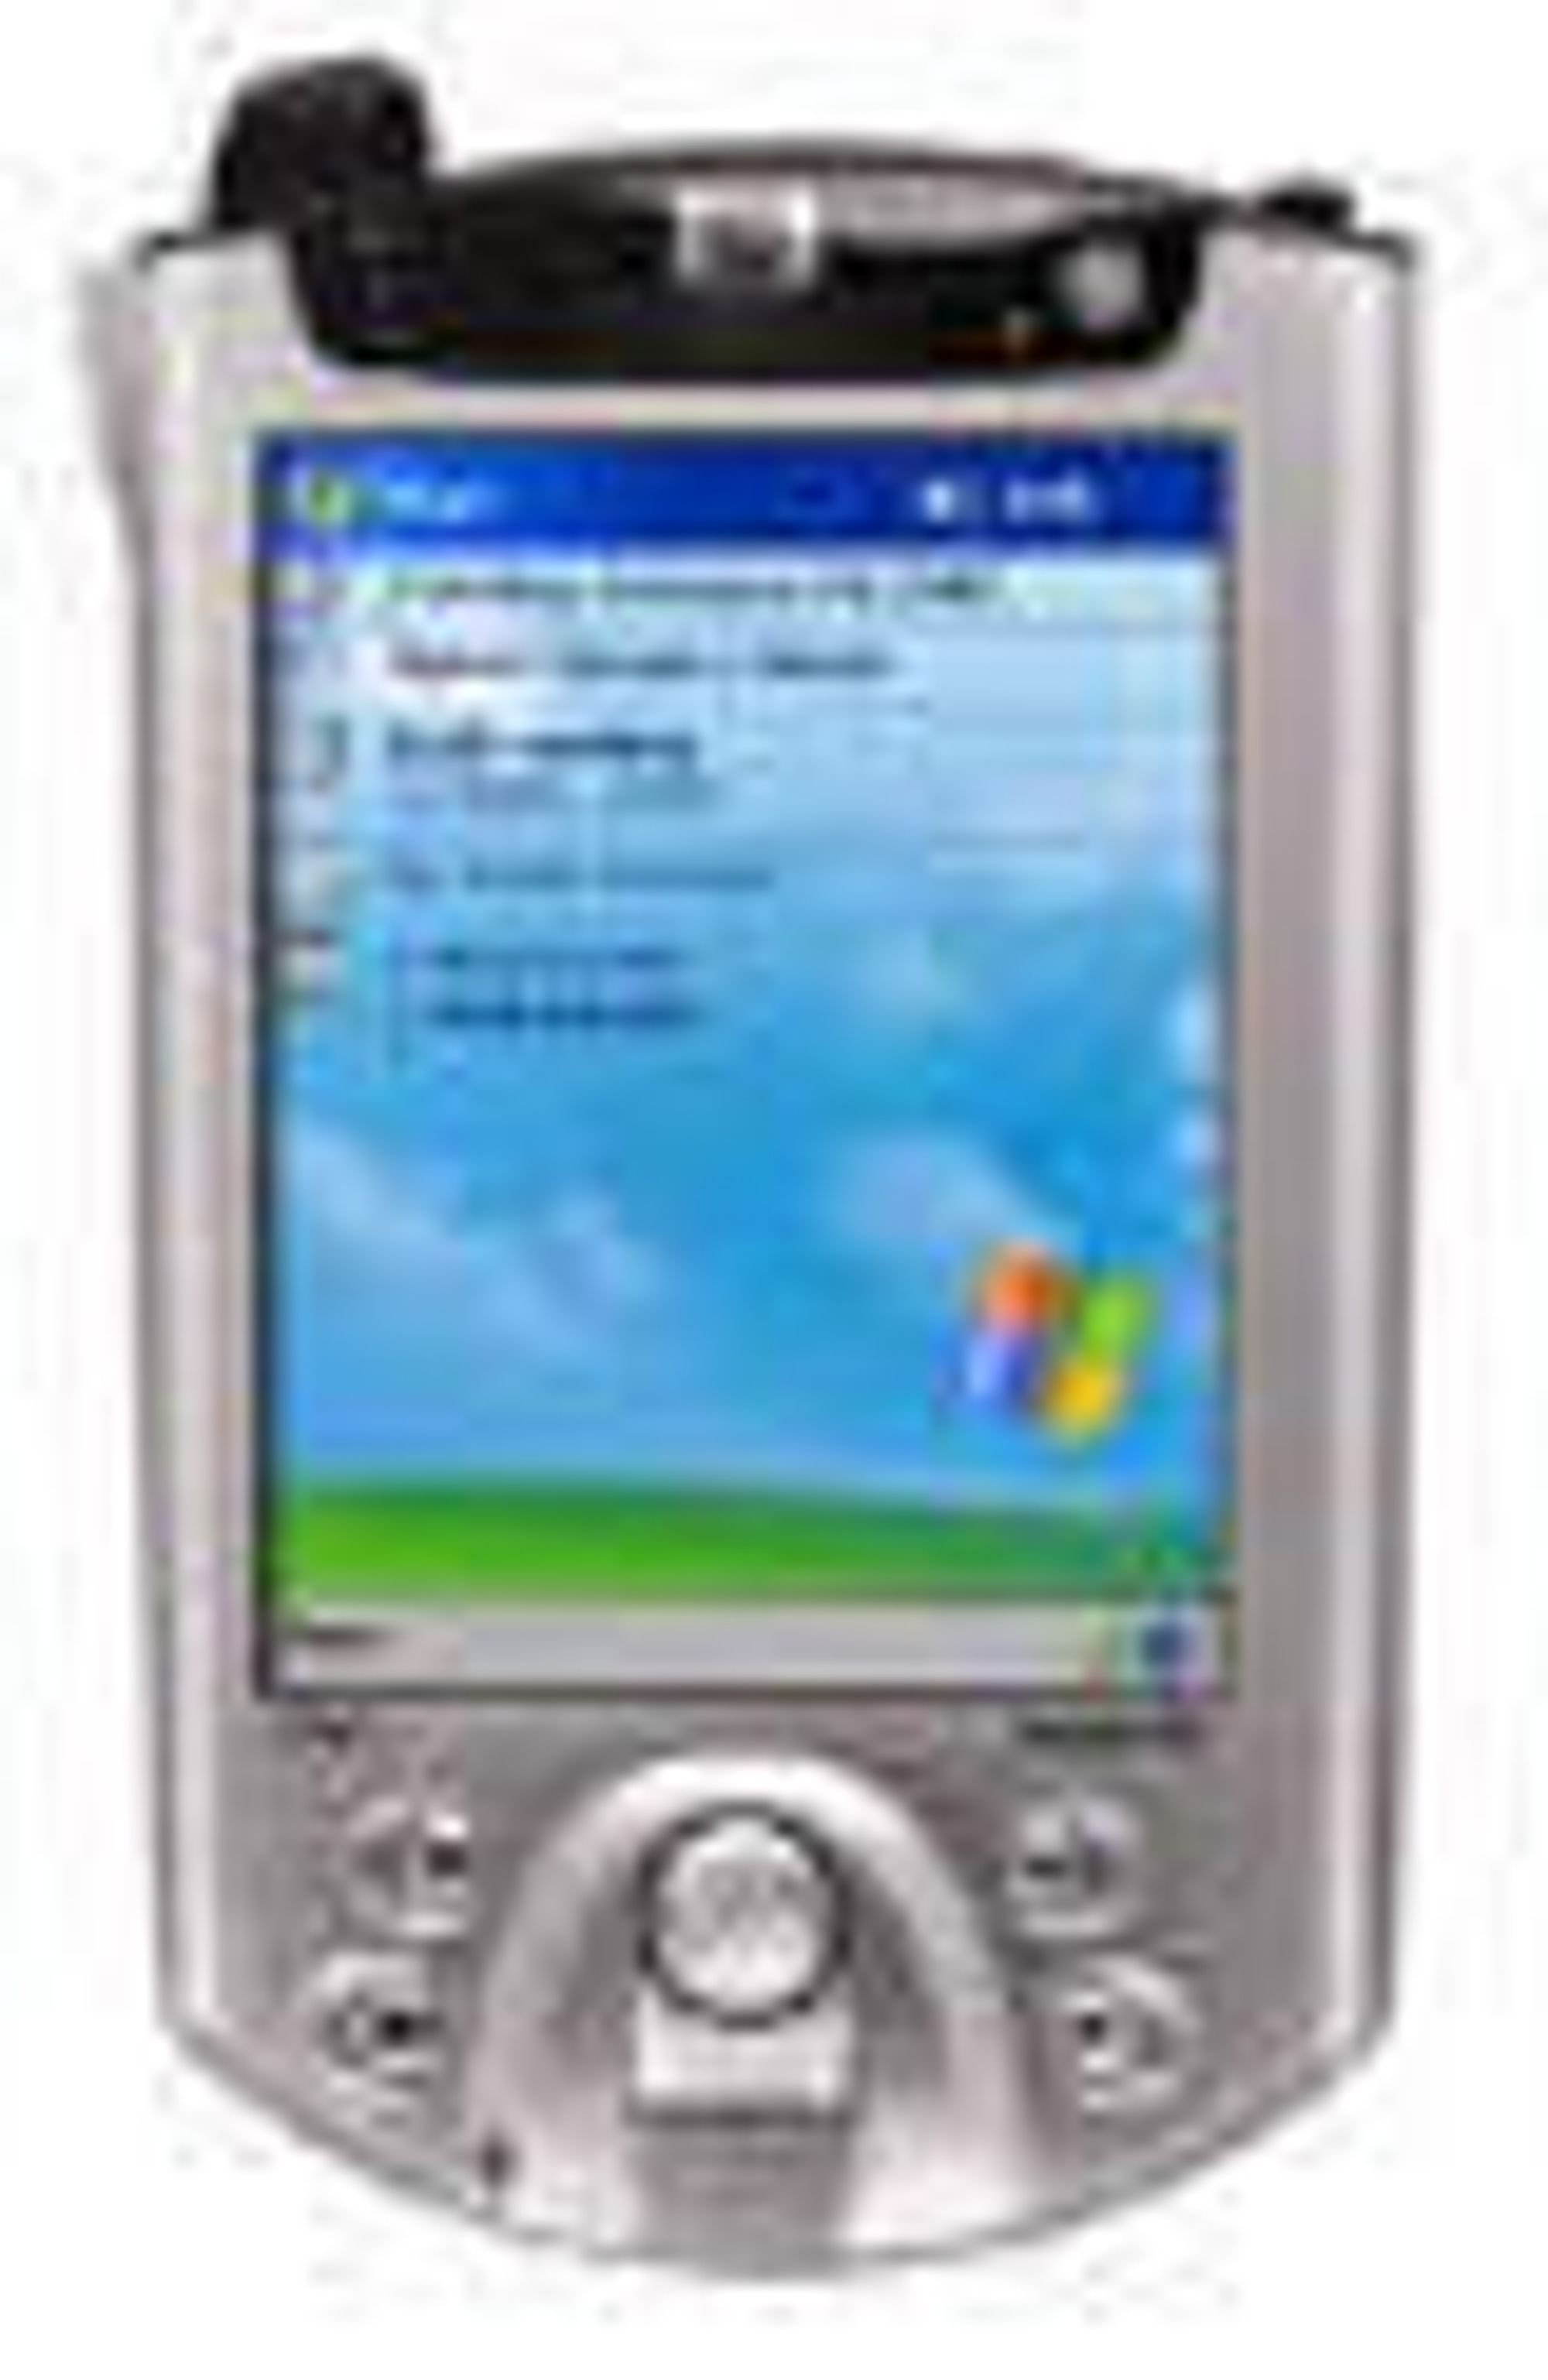 iPAQ h5450, PDA fra HP